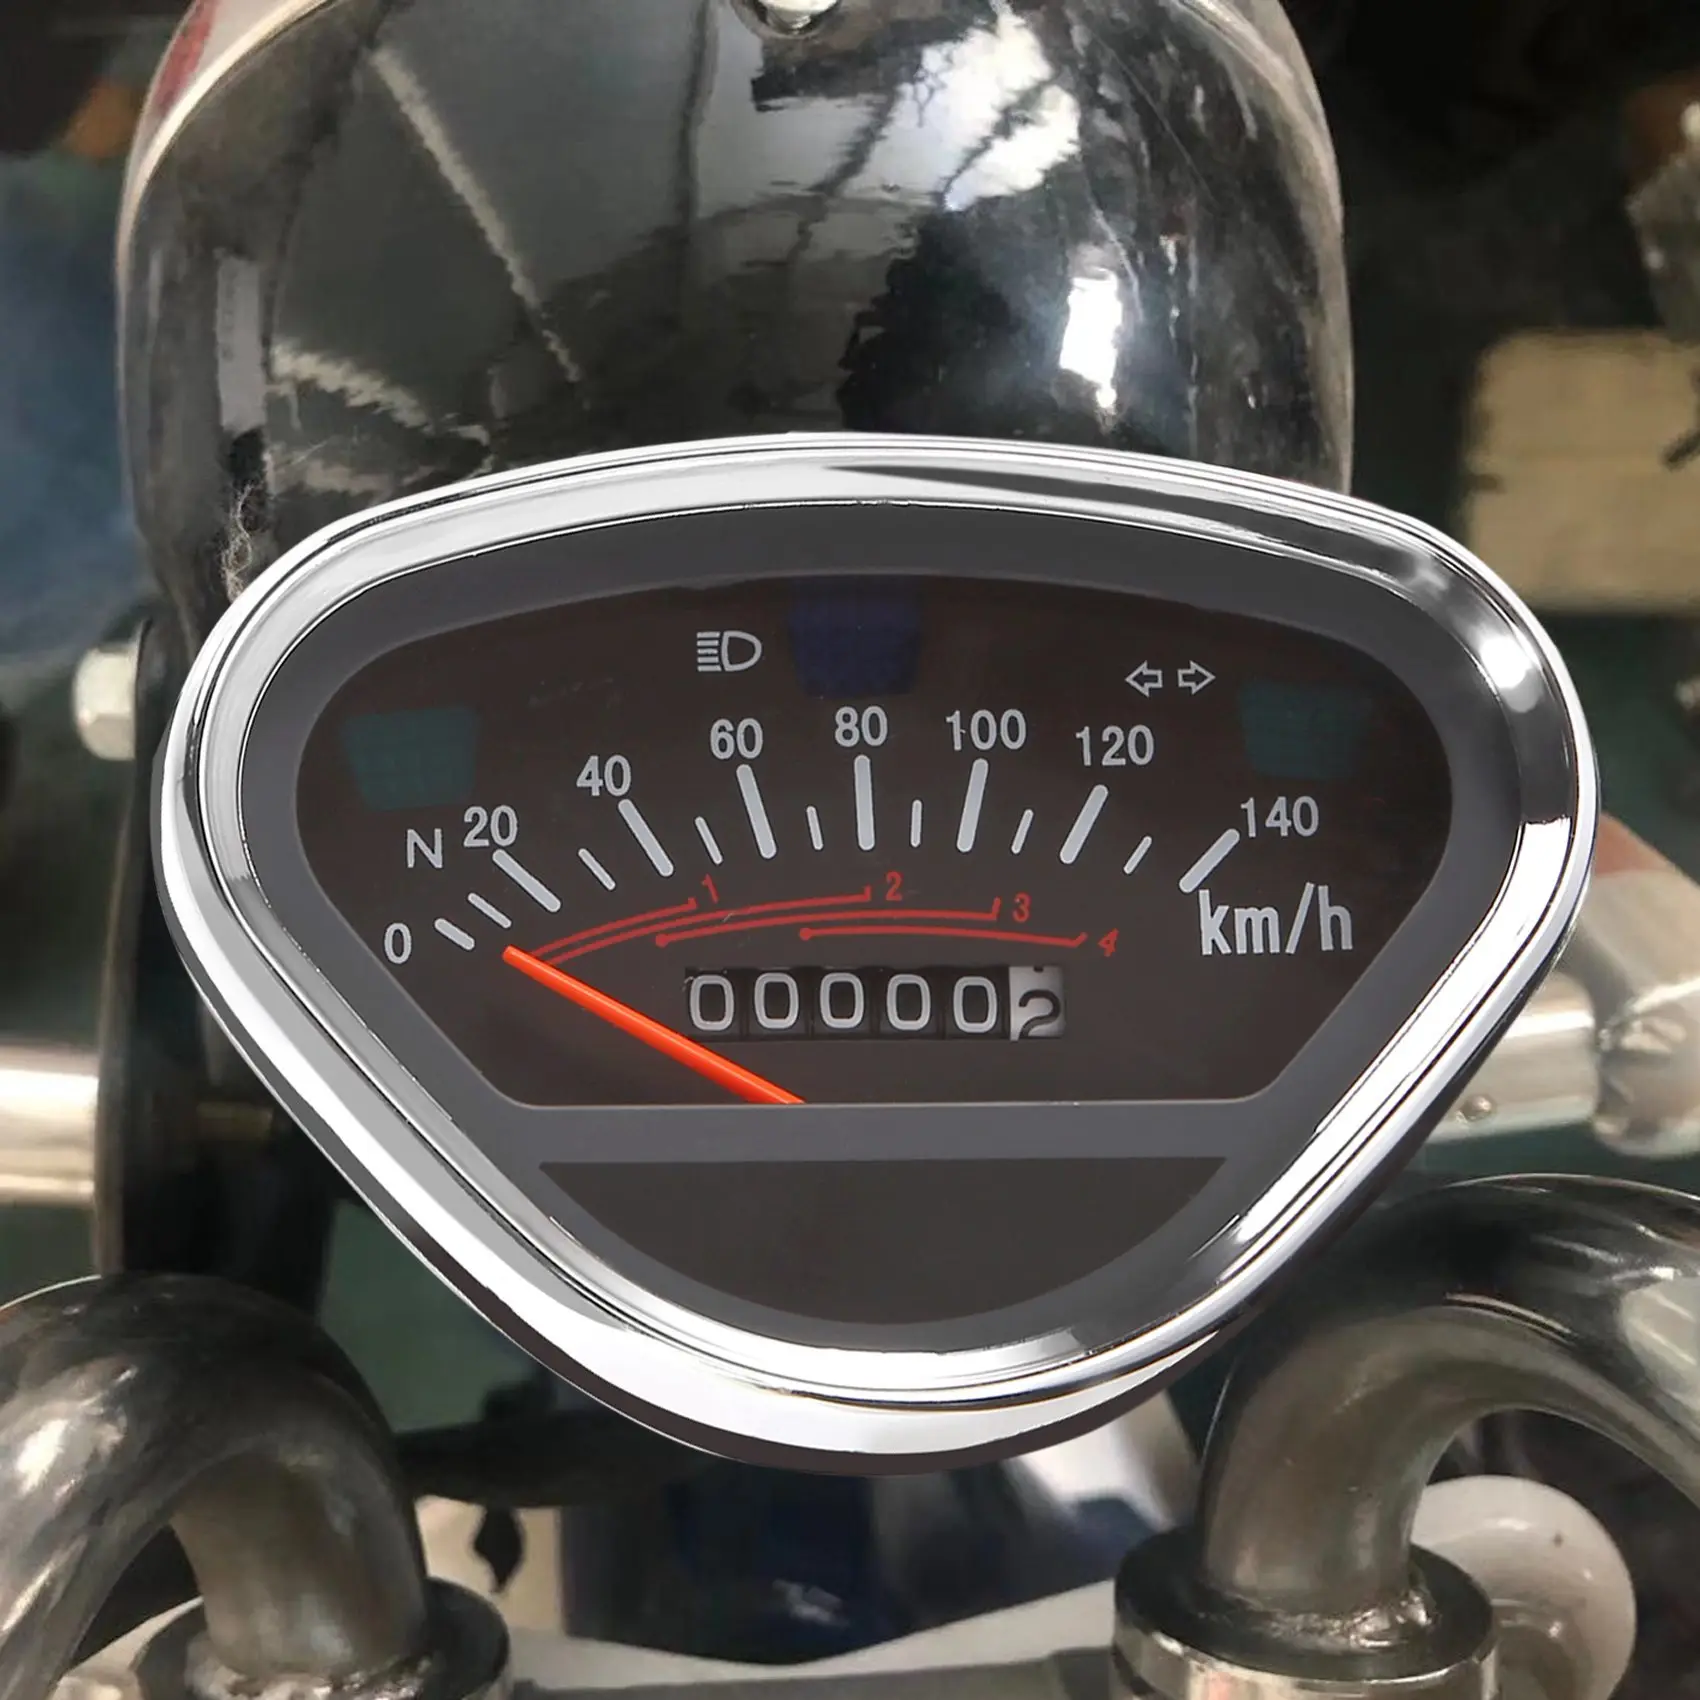 Motocicleta Indicador Digital, Metro O eter, Backlight, LCD, Honda DAX 70, Vintage, Jialing70